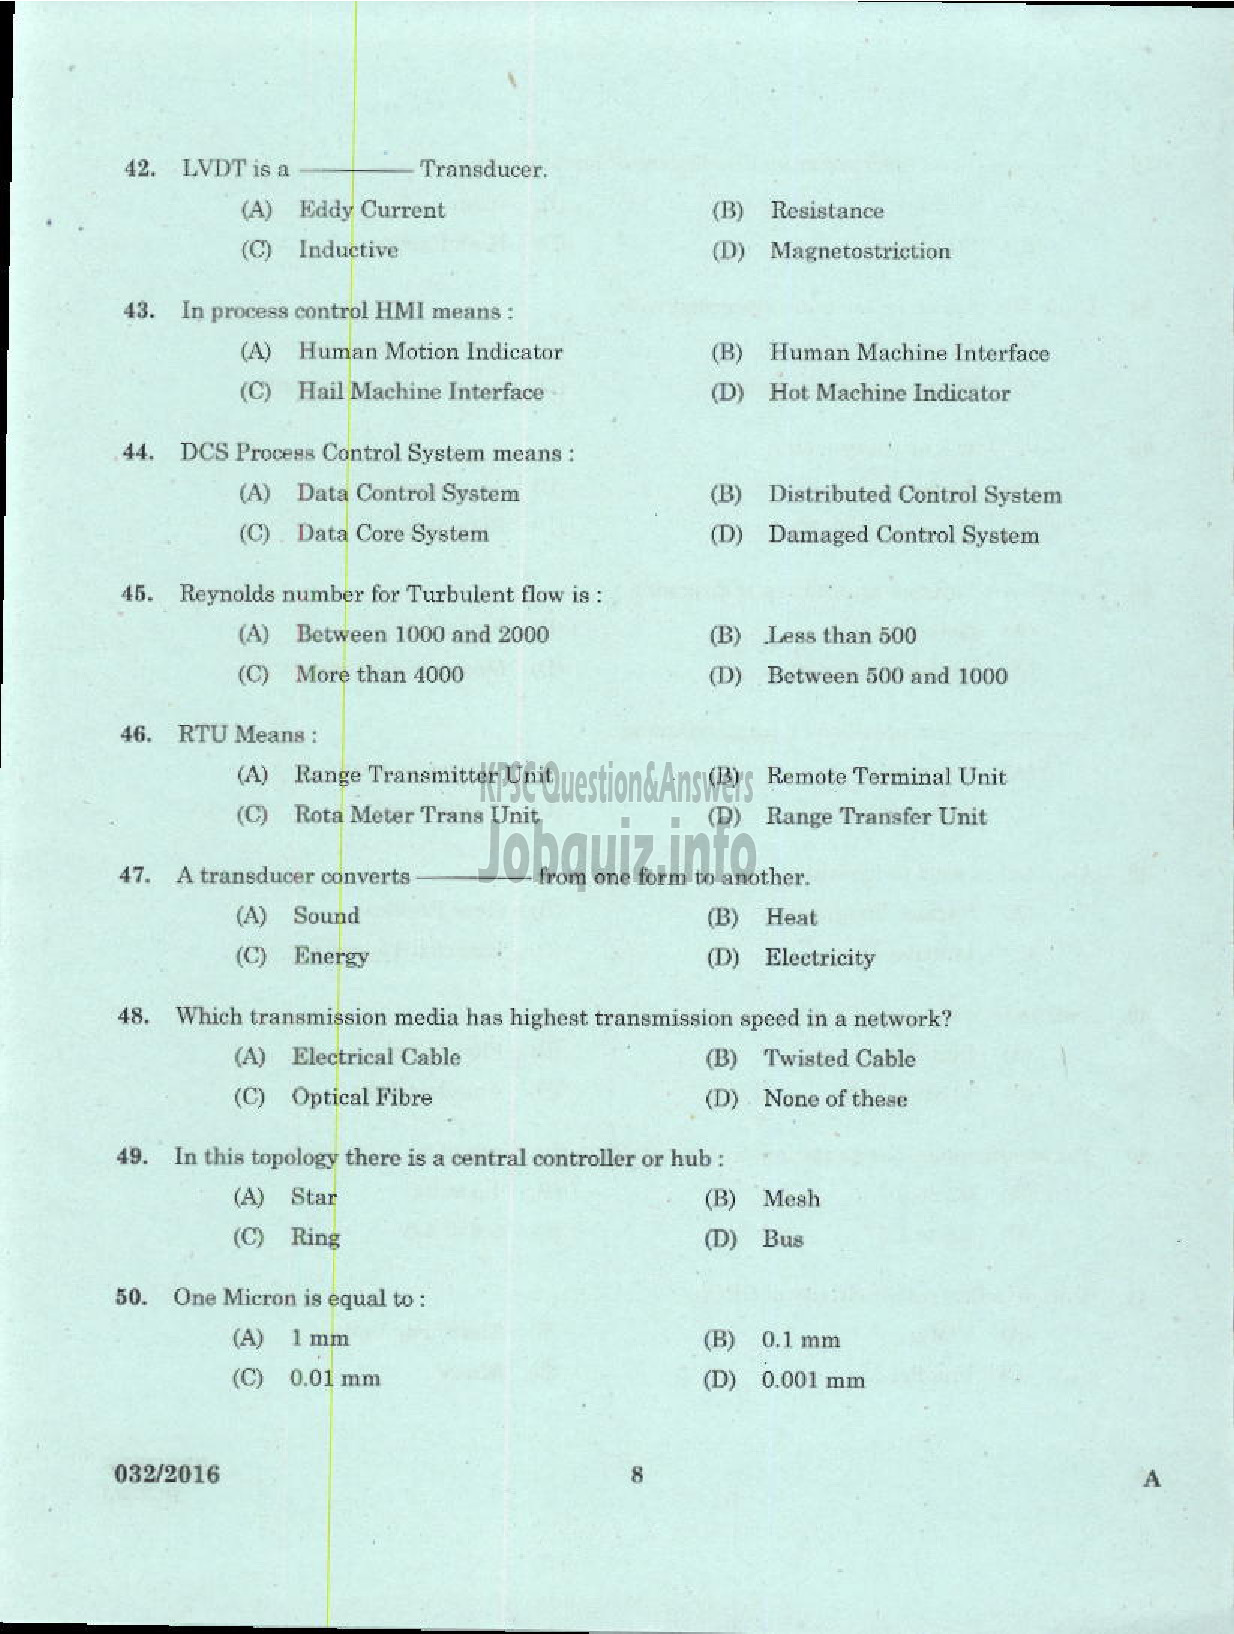 Kerala PSC Question Paper - TRADESMAN INSTRUMENT MECHANIC TECHNICAL EDUCATION-6